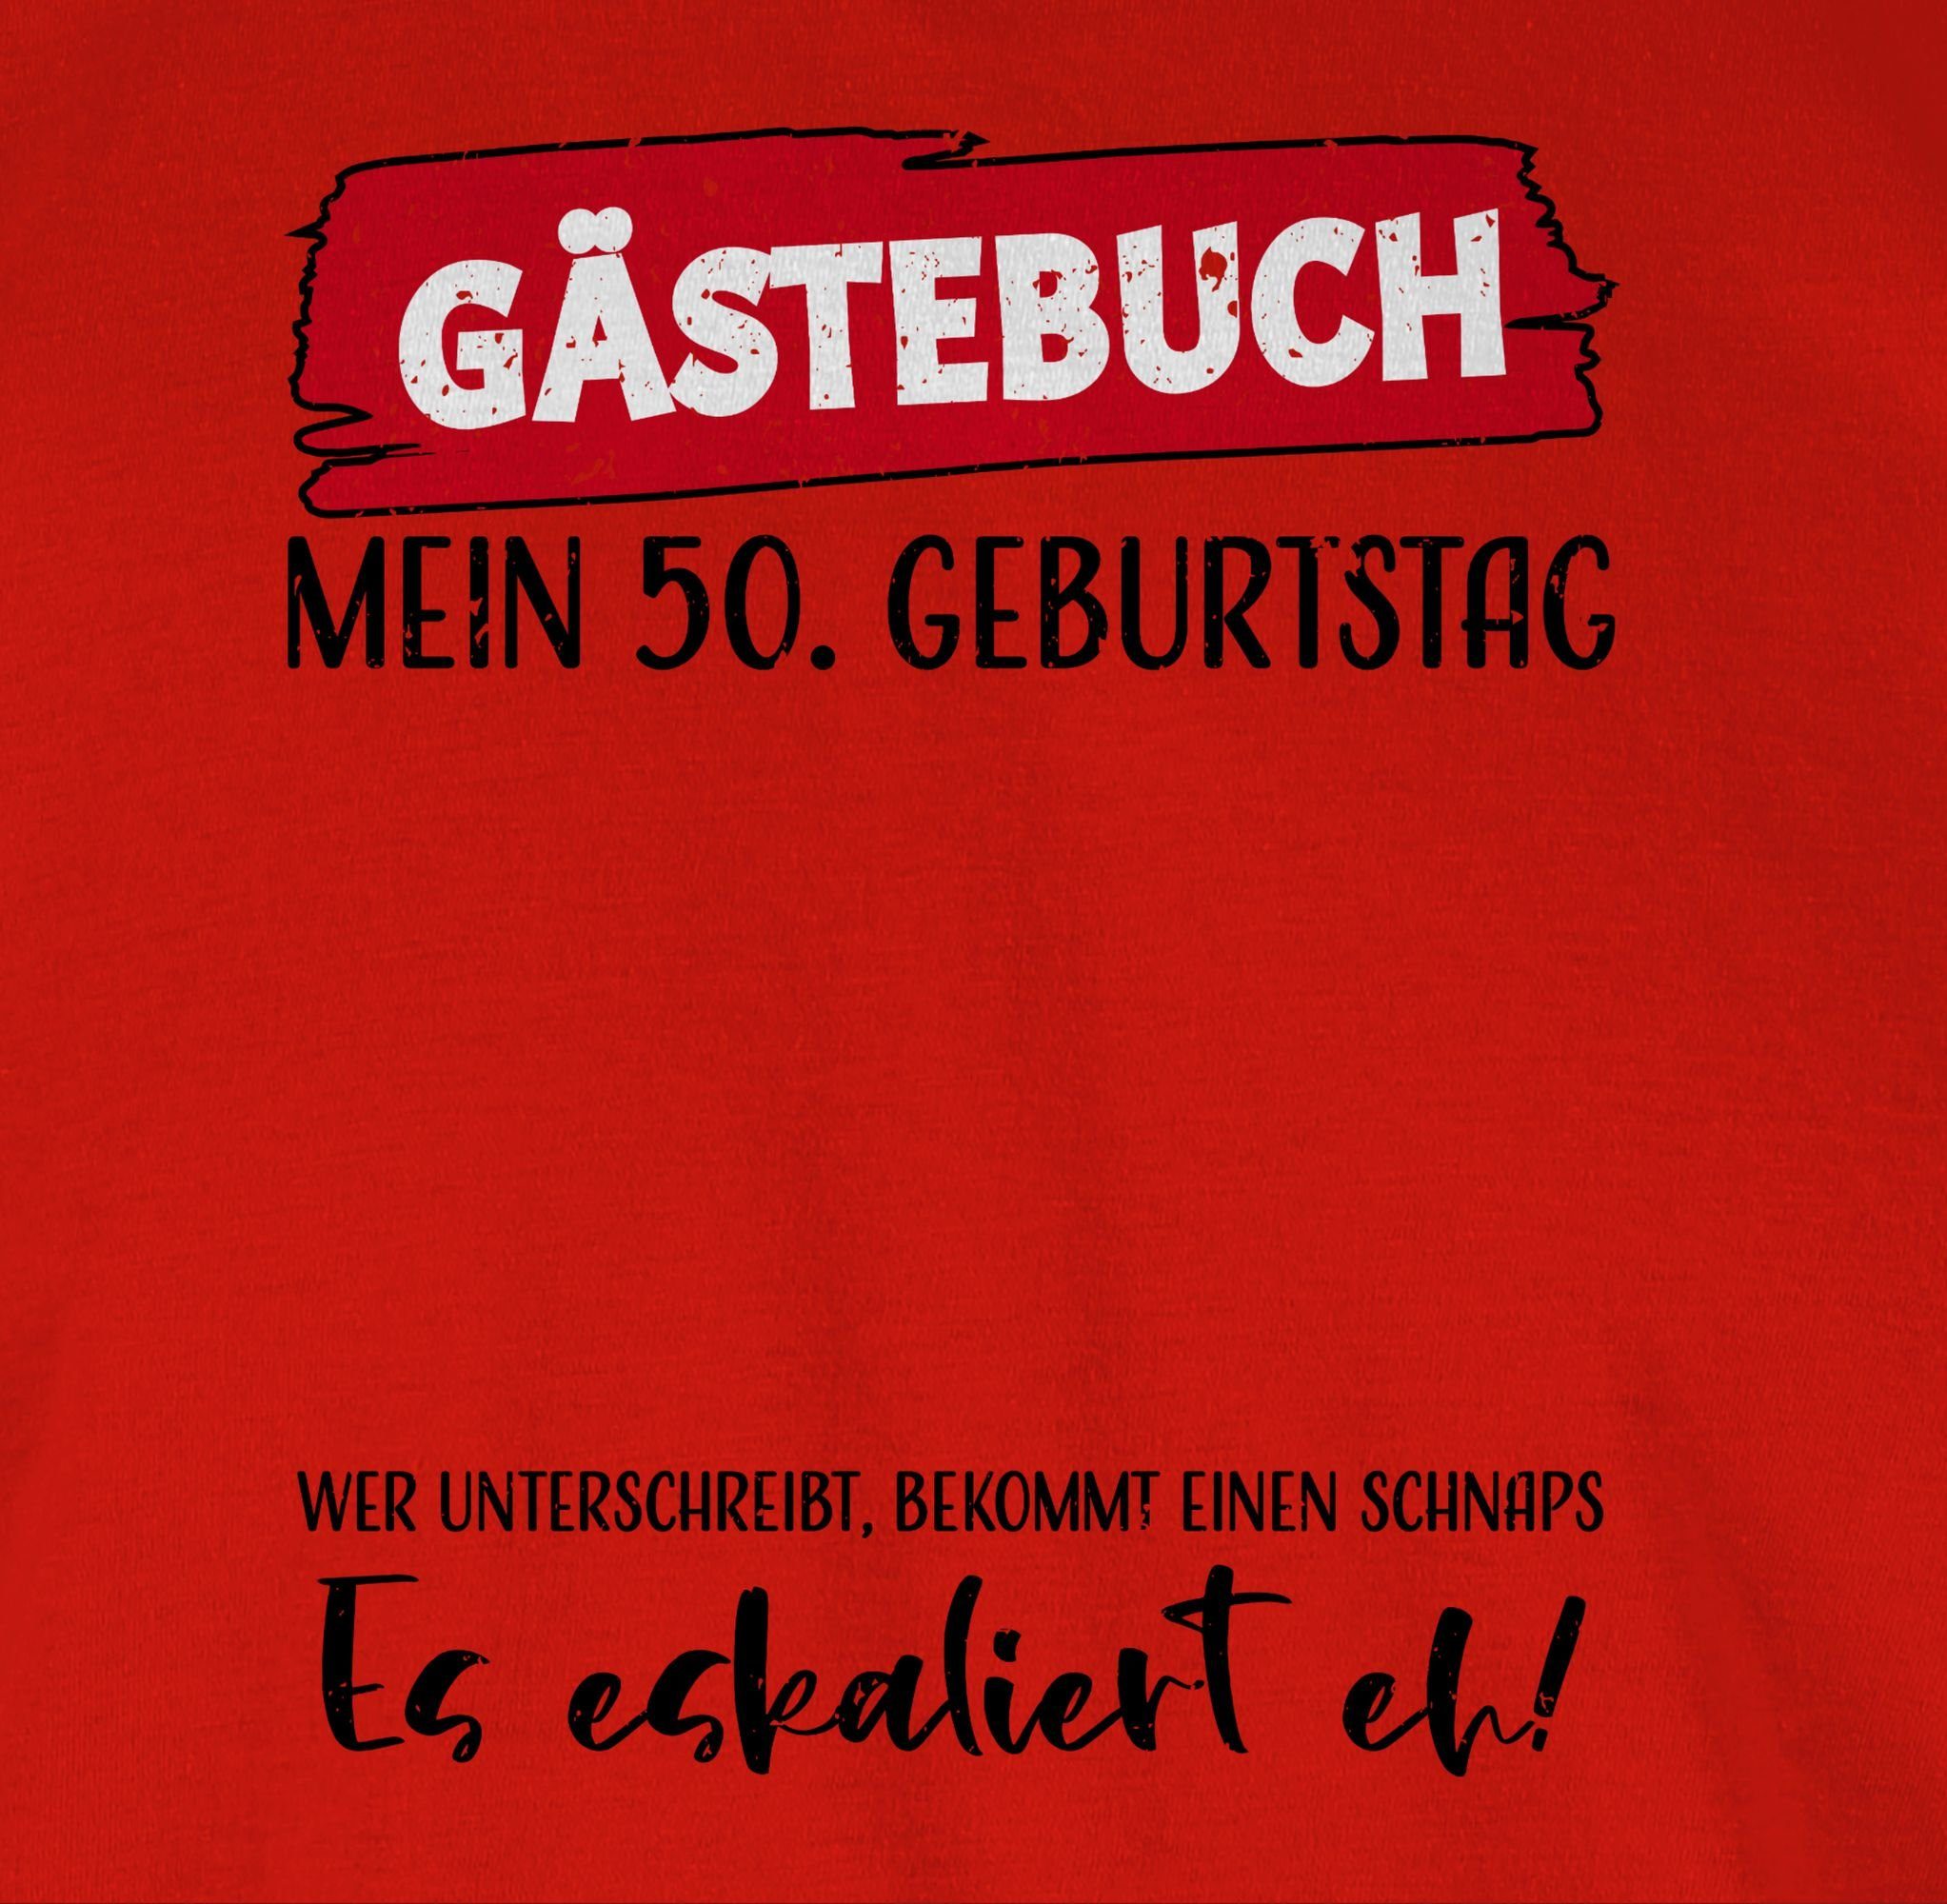 50. Rot T-Shirt Geburtstag Gästebuch Shirtracer Geburtstag 50. 02